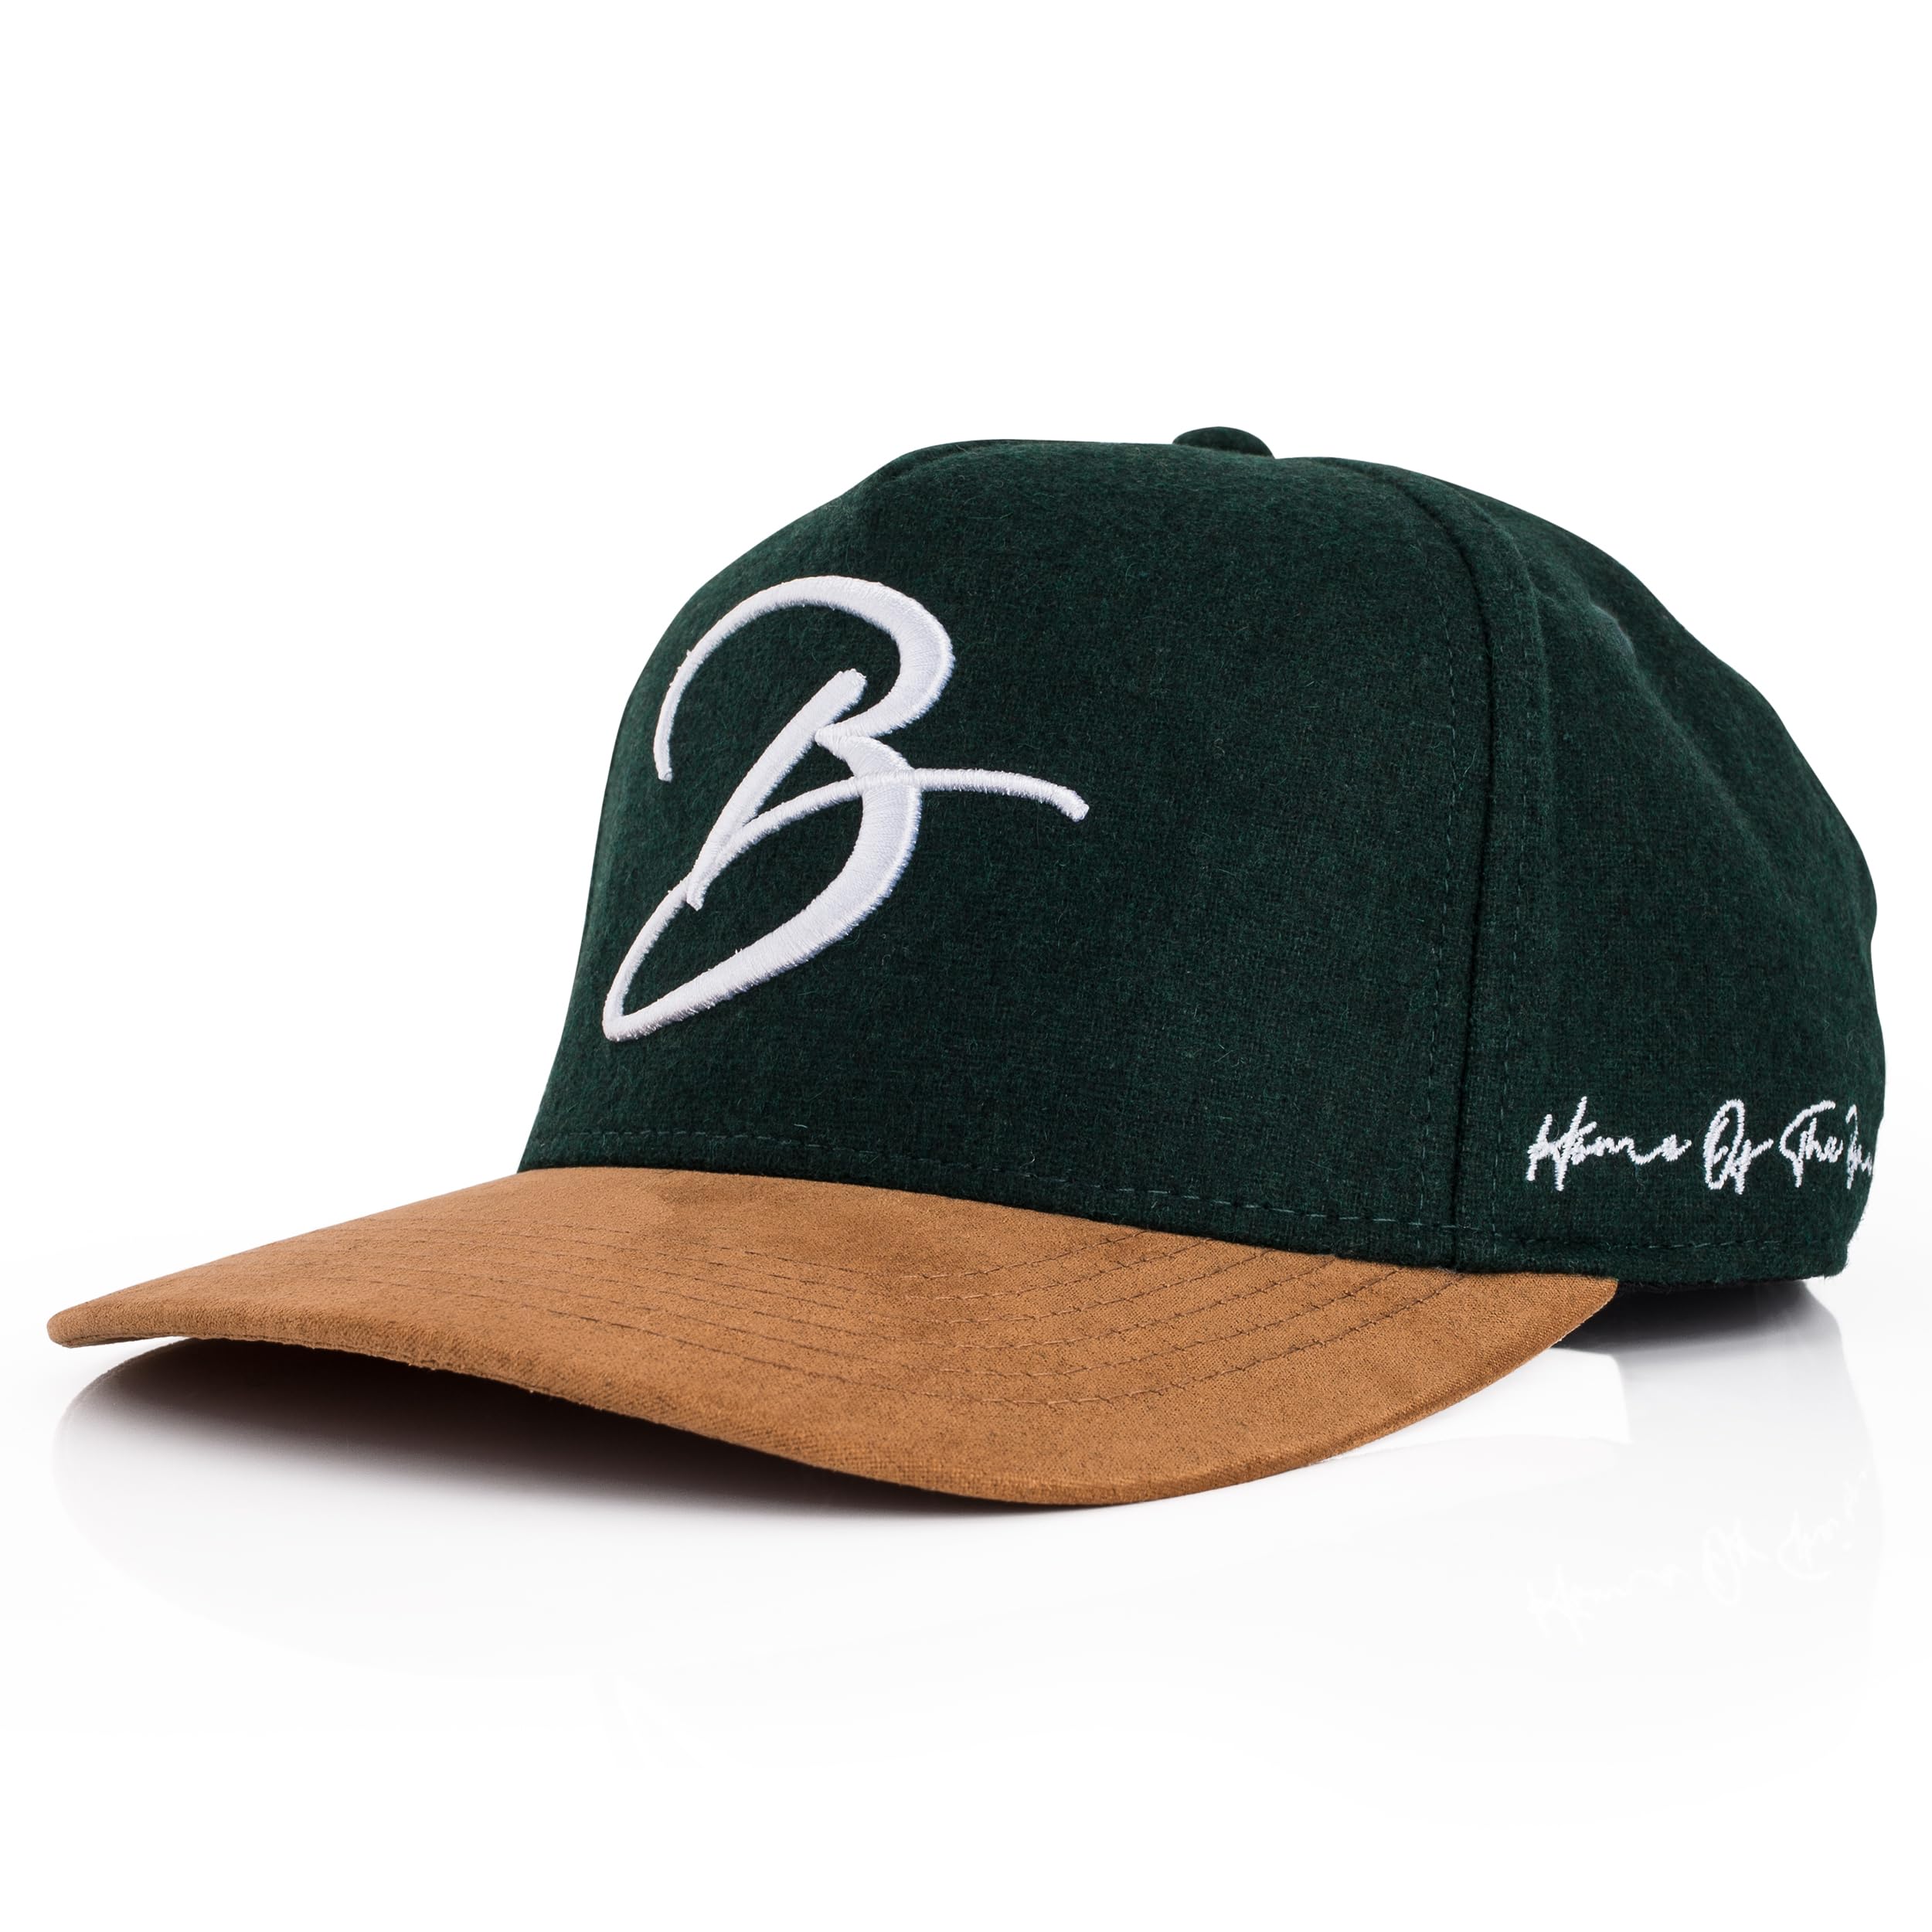 Blackskies Script Baseball Cap | Unisex Luxury Premium Snapback Hat Cap Flannel Synthetic Suede Visor Suede Green - Caps Fitted Caps Fitted Blackskies